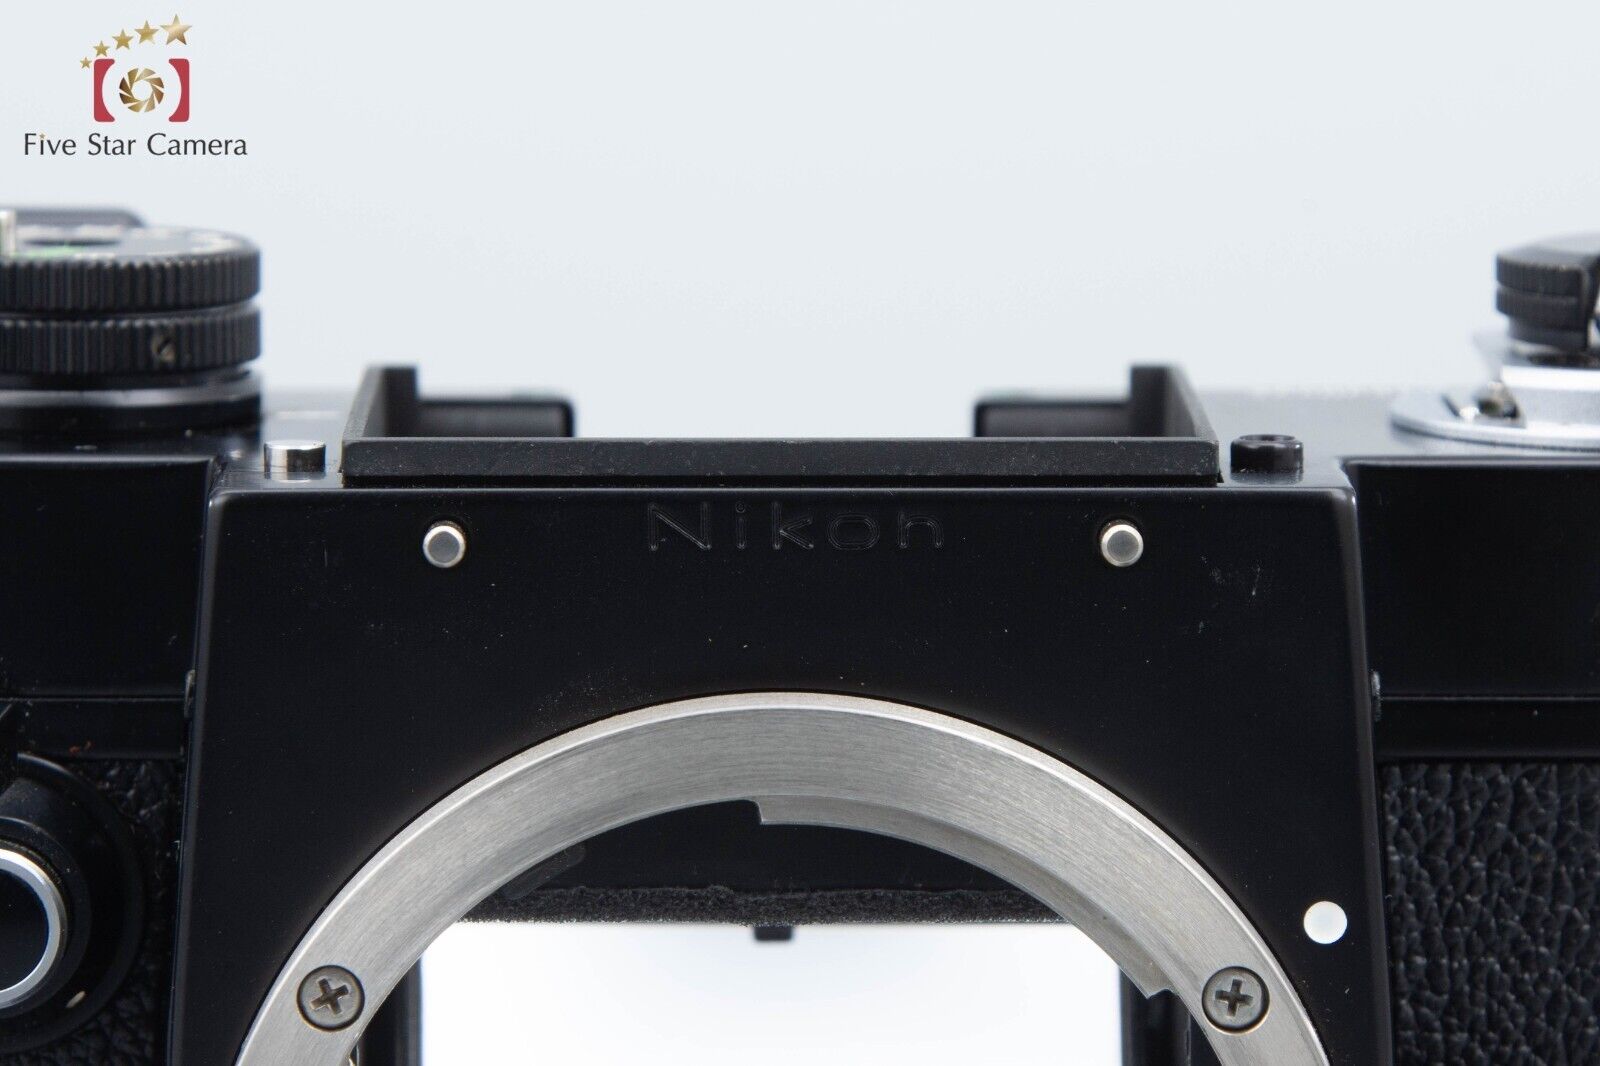 Near Mint!! Nikon F2 Photomic S Black 35mm SLR Film Camera Body